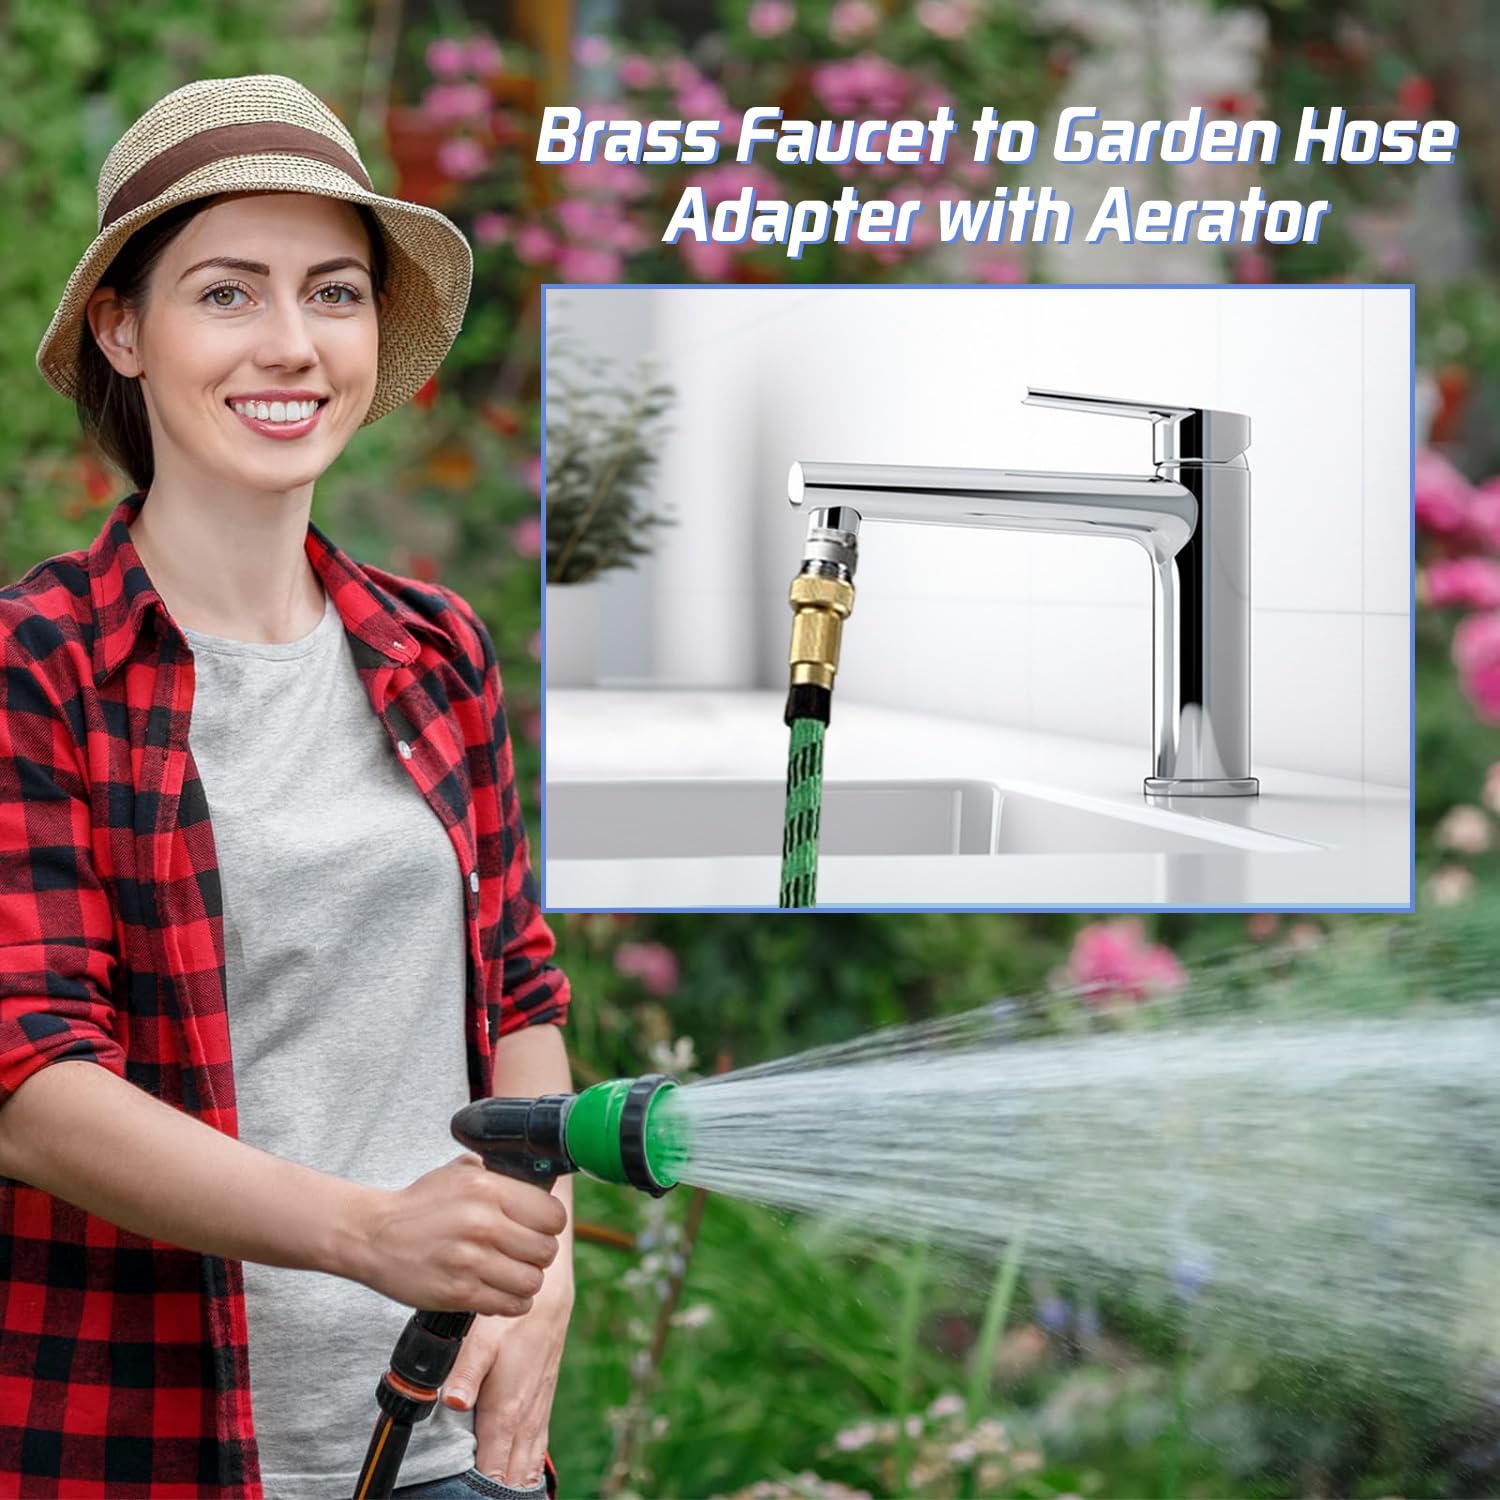 Happyreise Brass Faucet to Garden Hose Adapter with Aerator,Sink Faucet Adapter to Garden Hose for Bathroom Kitchen,3/4" GHT thread Chrome